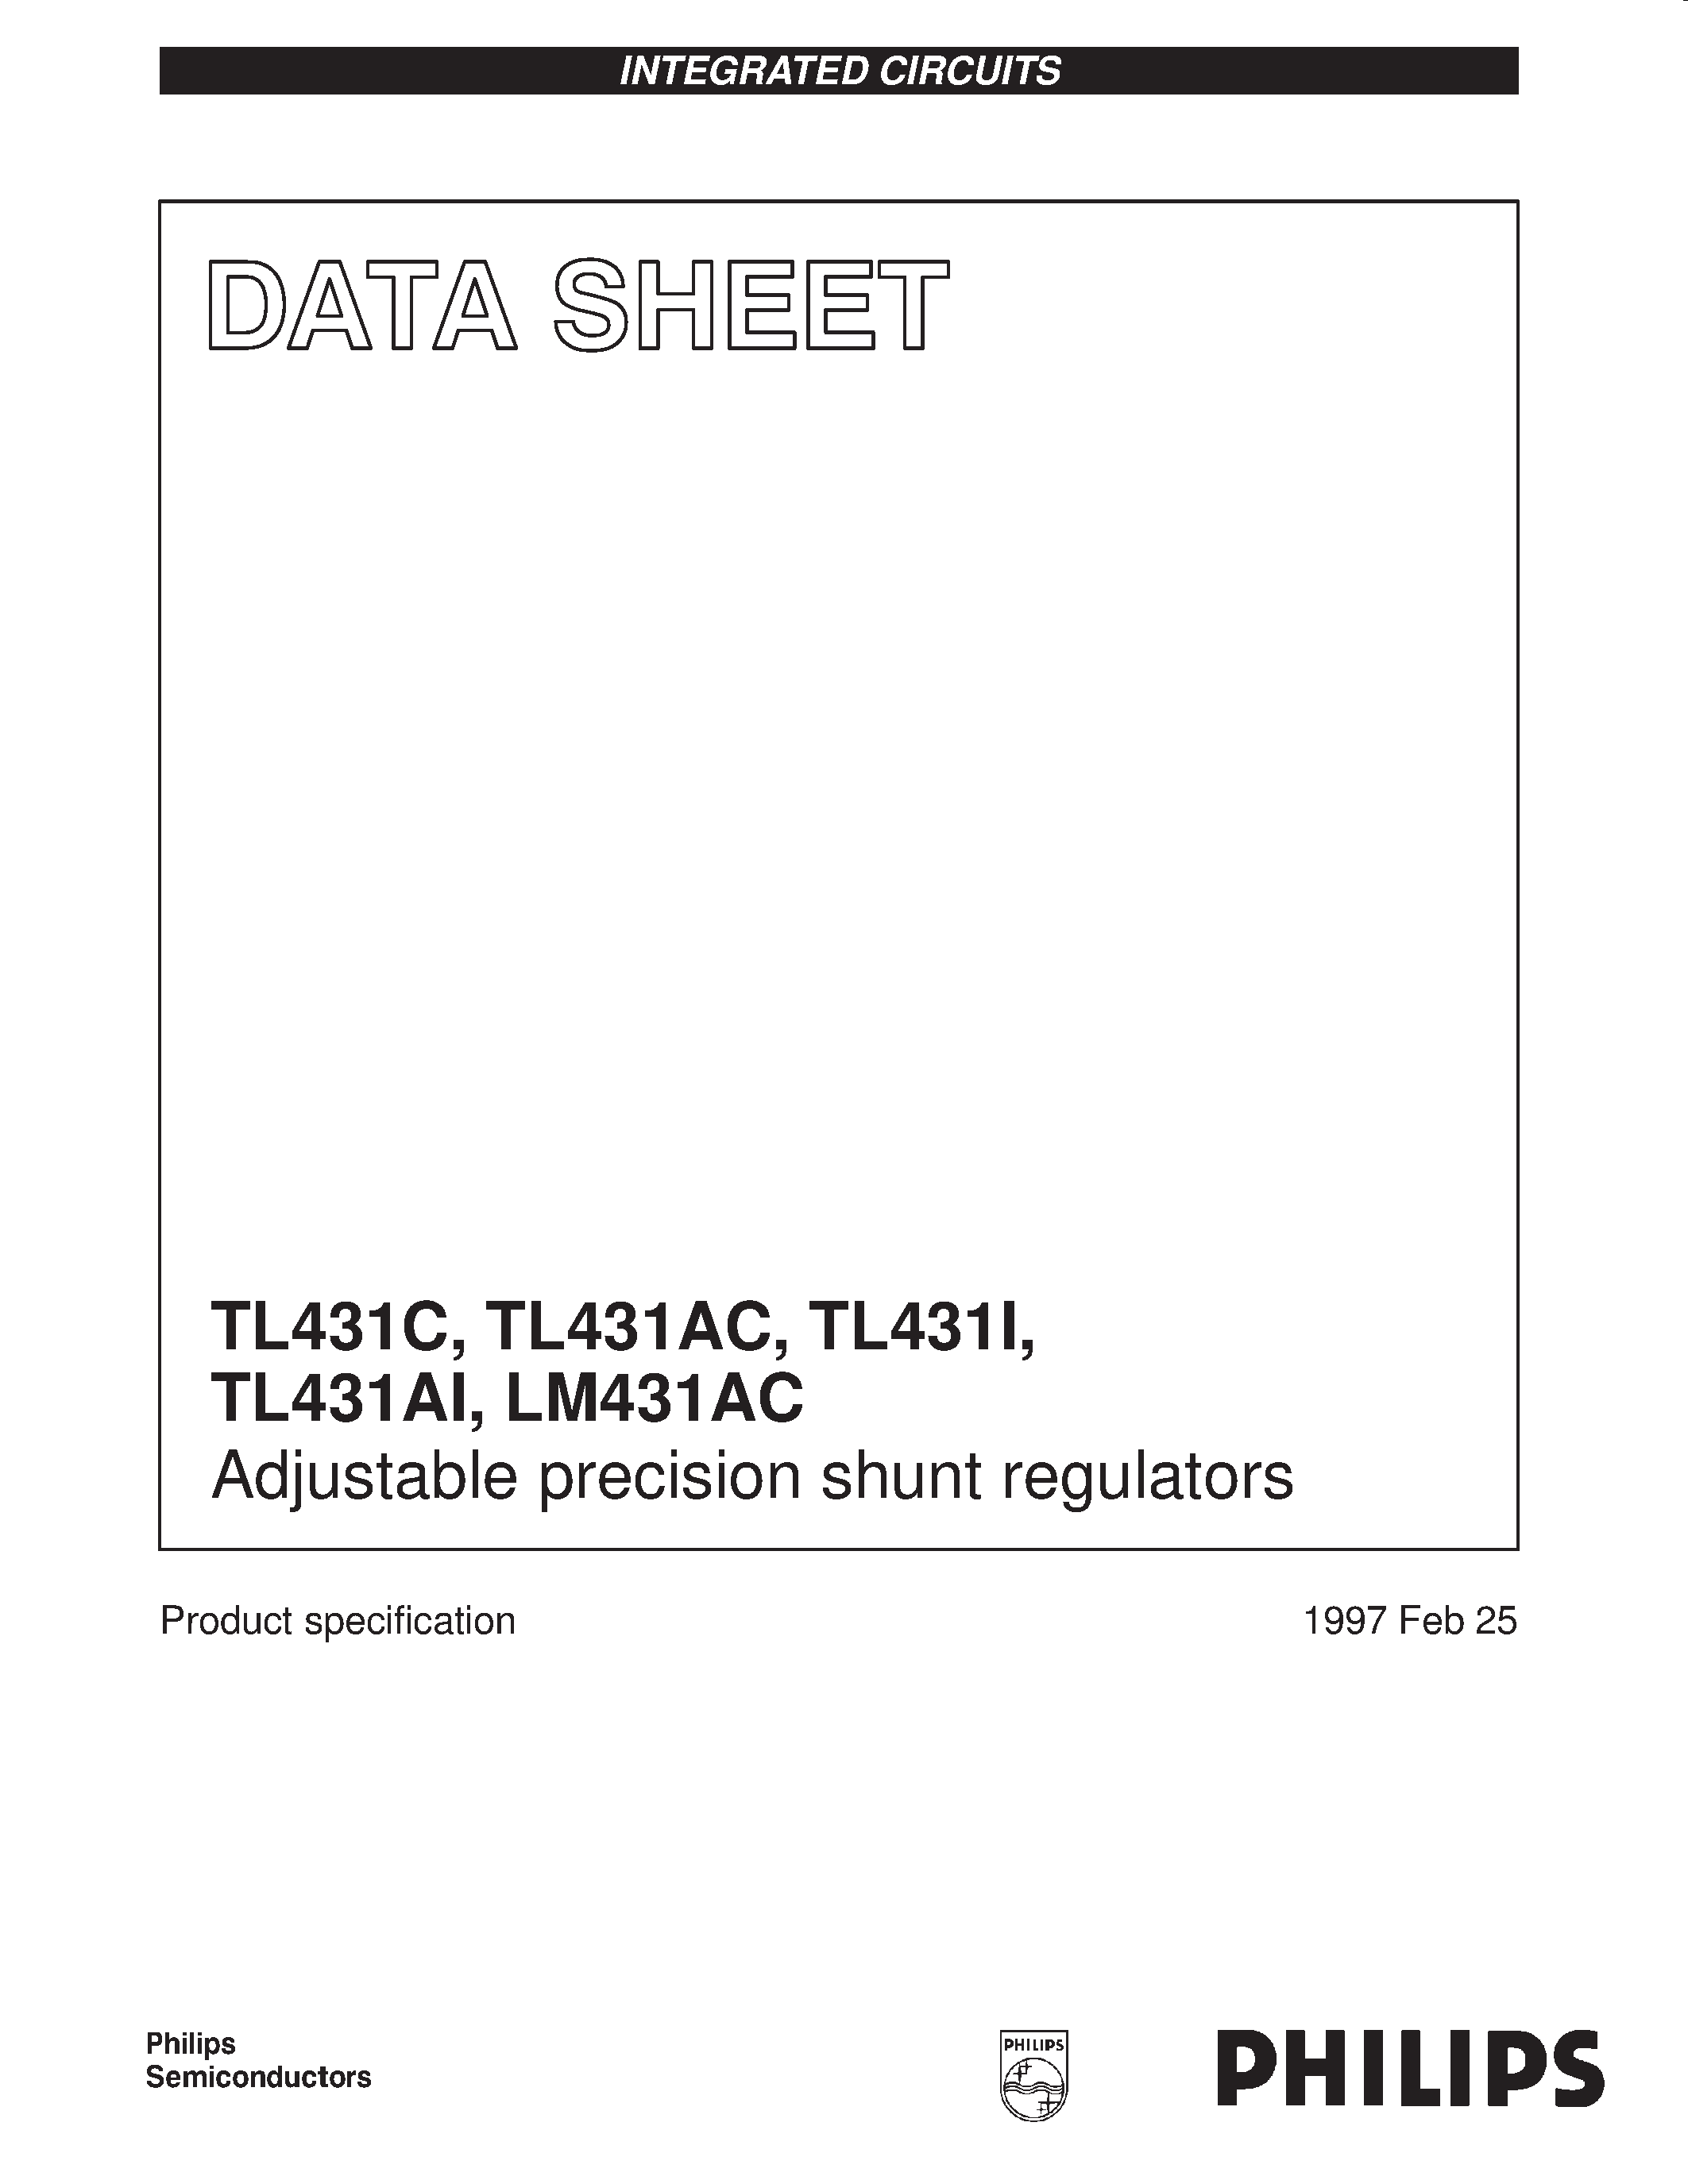 Datasheet TL431AC - Adjustable precision shunt regulators page 1